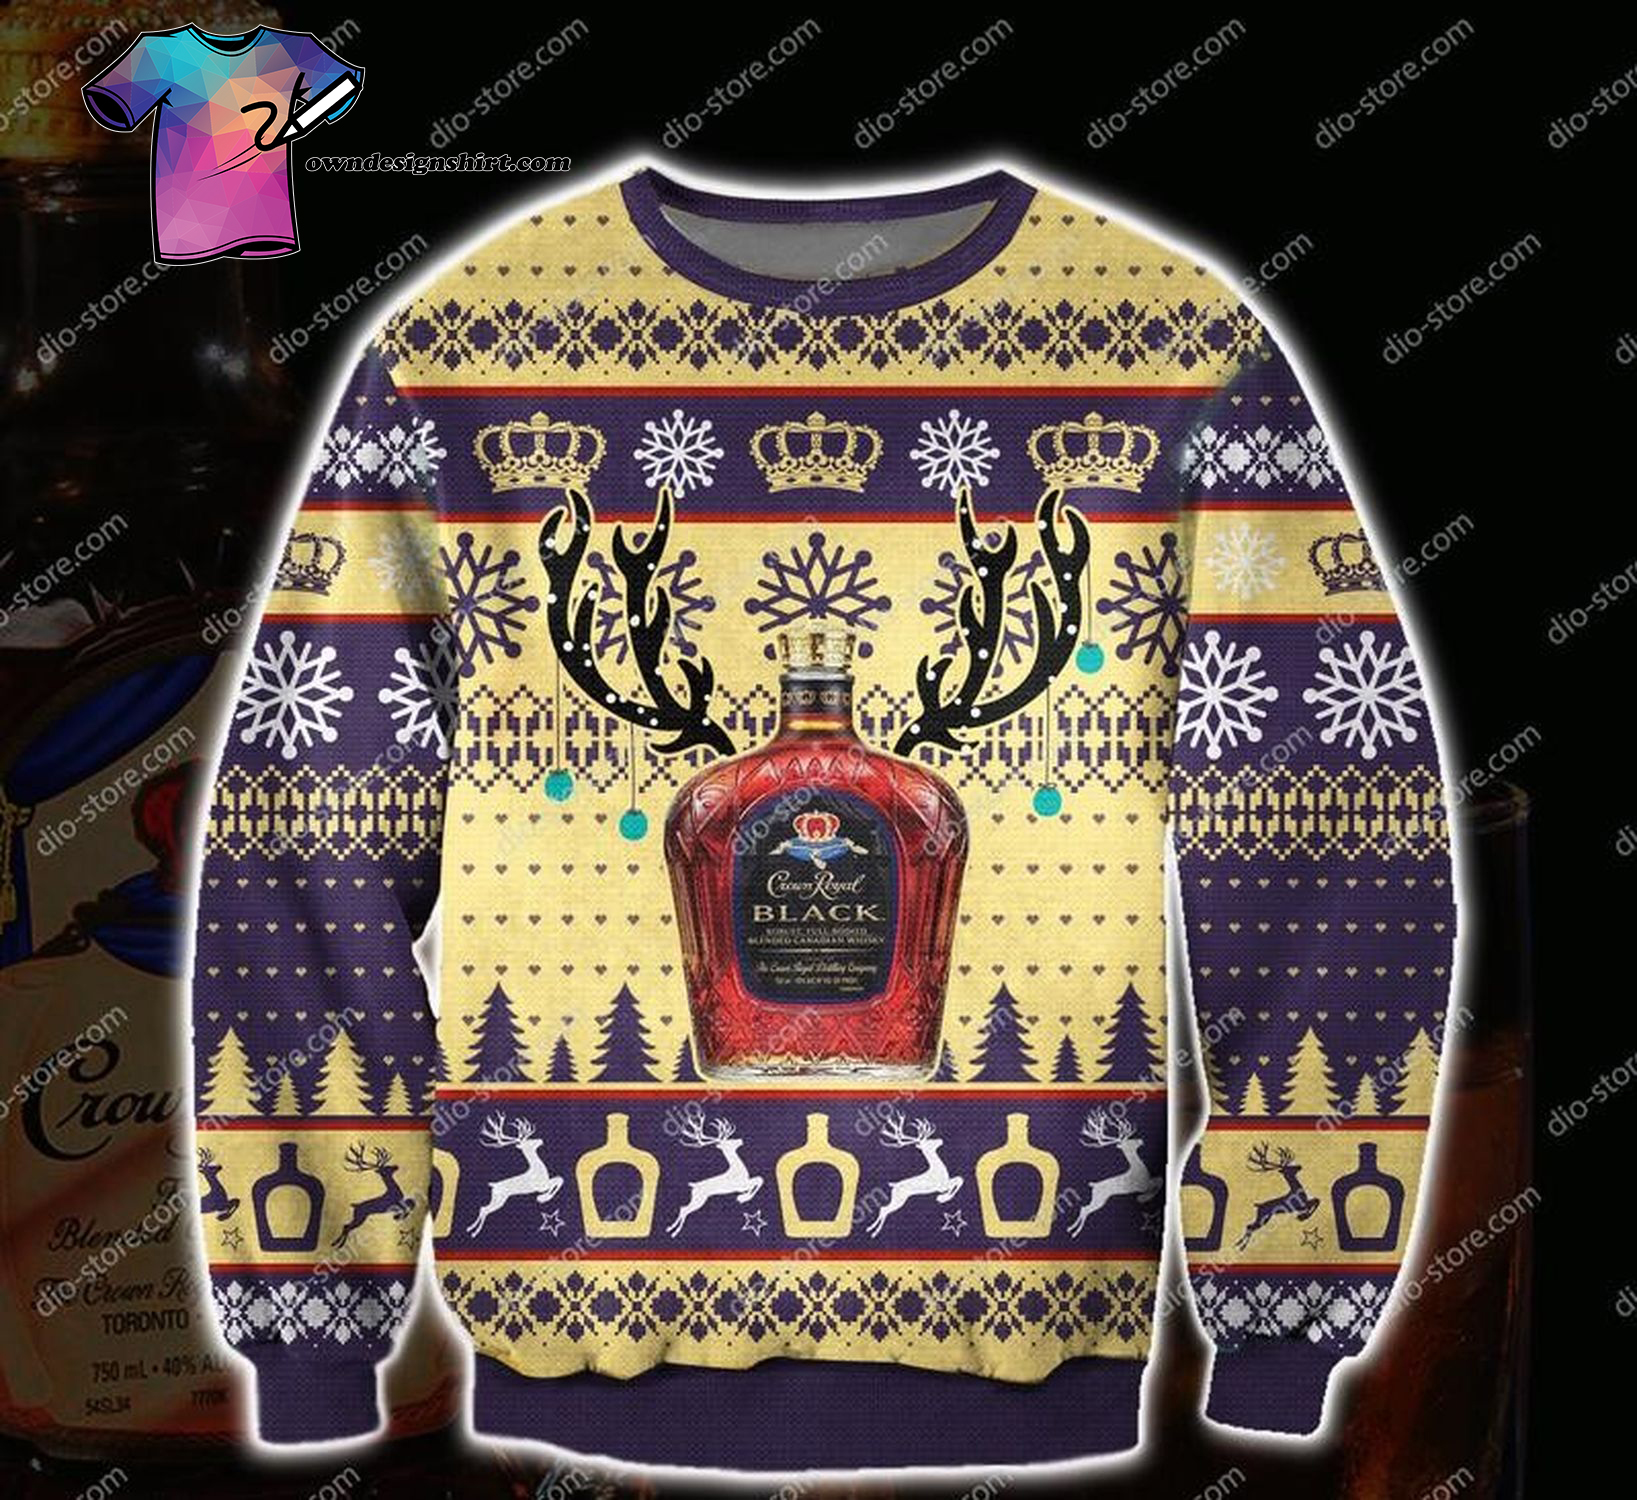 Crown Royal All Over Printed Ugly Christmas Sweater